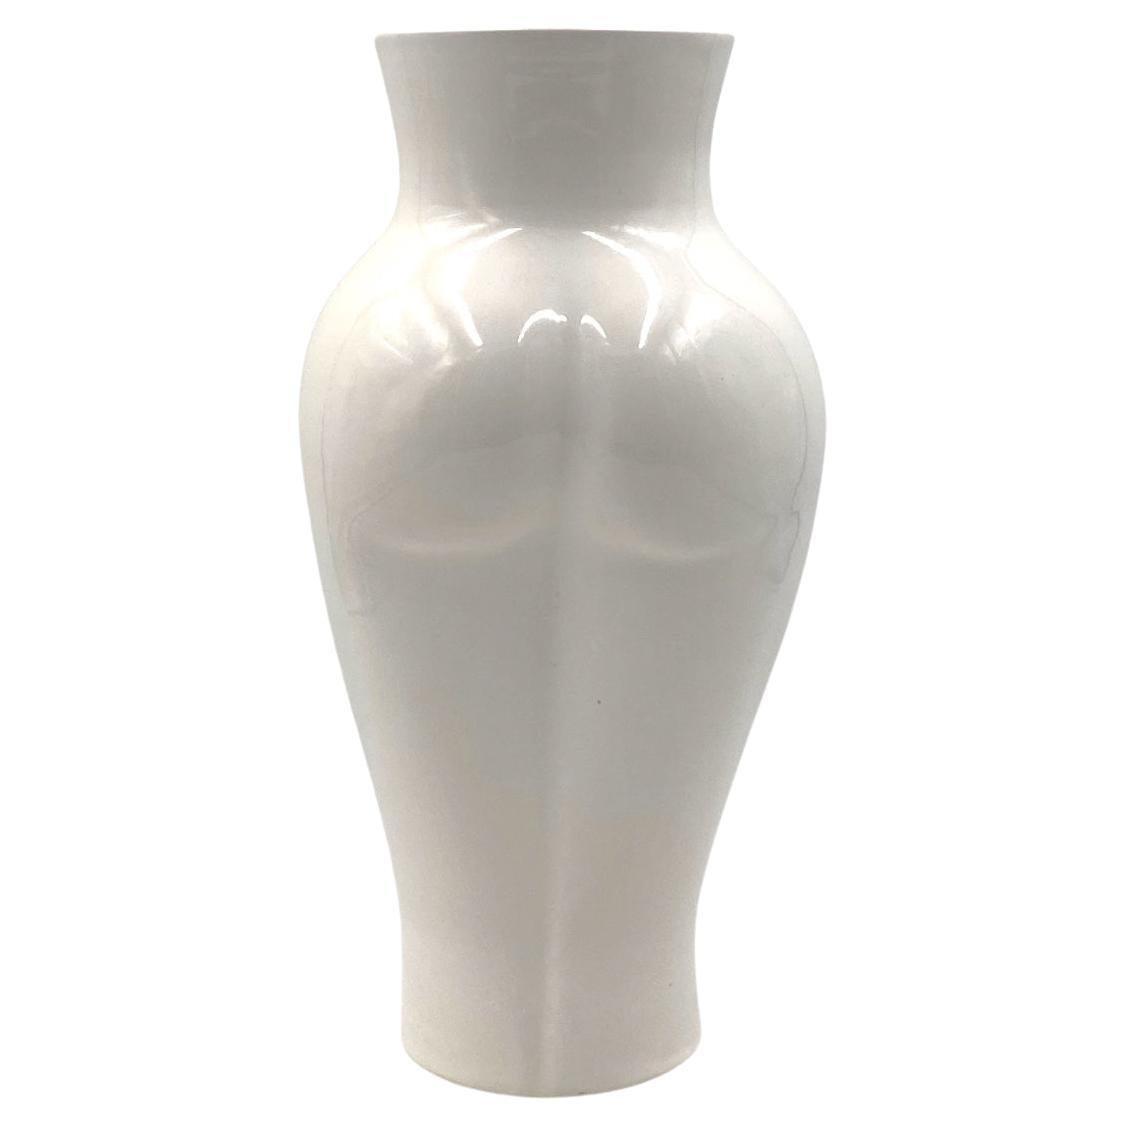 Postmodern ceramic 'Femme' vase, Baba, Vallauris France ca. 1980s For Sale